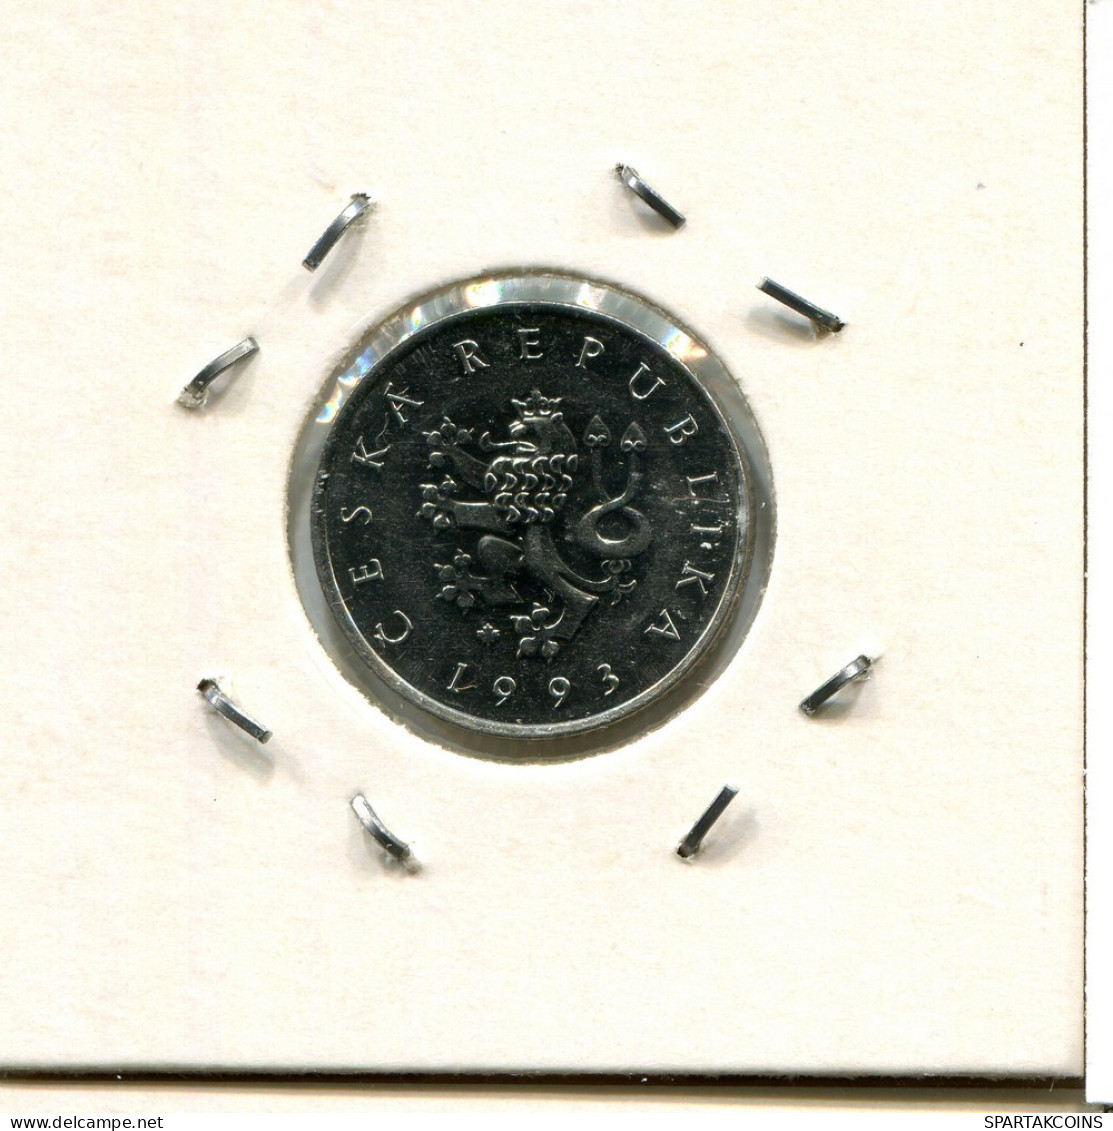 1 KORUNA 1993 REPÚBLICA CHECA CZECH REPUBLIC Moneda #AP737.2.E.A - Repubblica Ceca